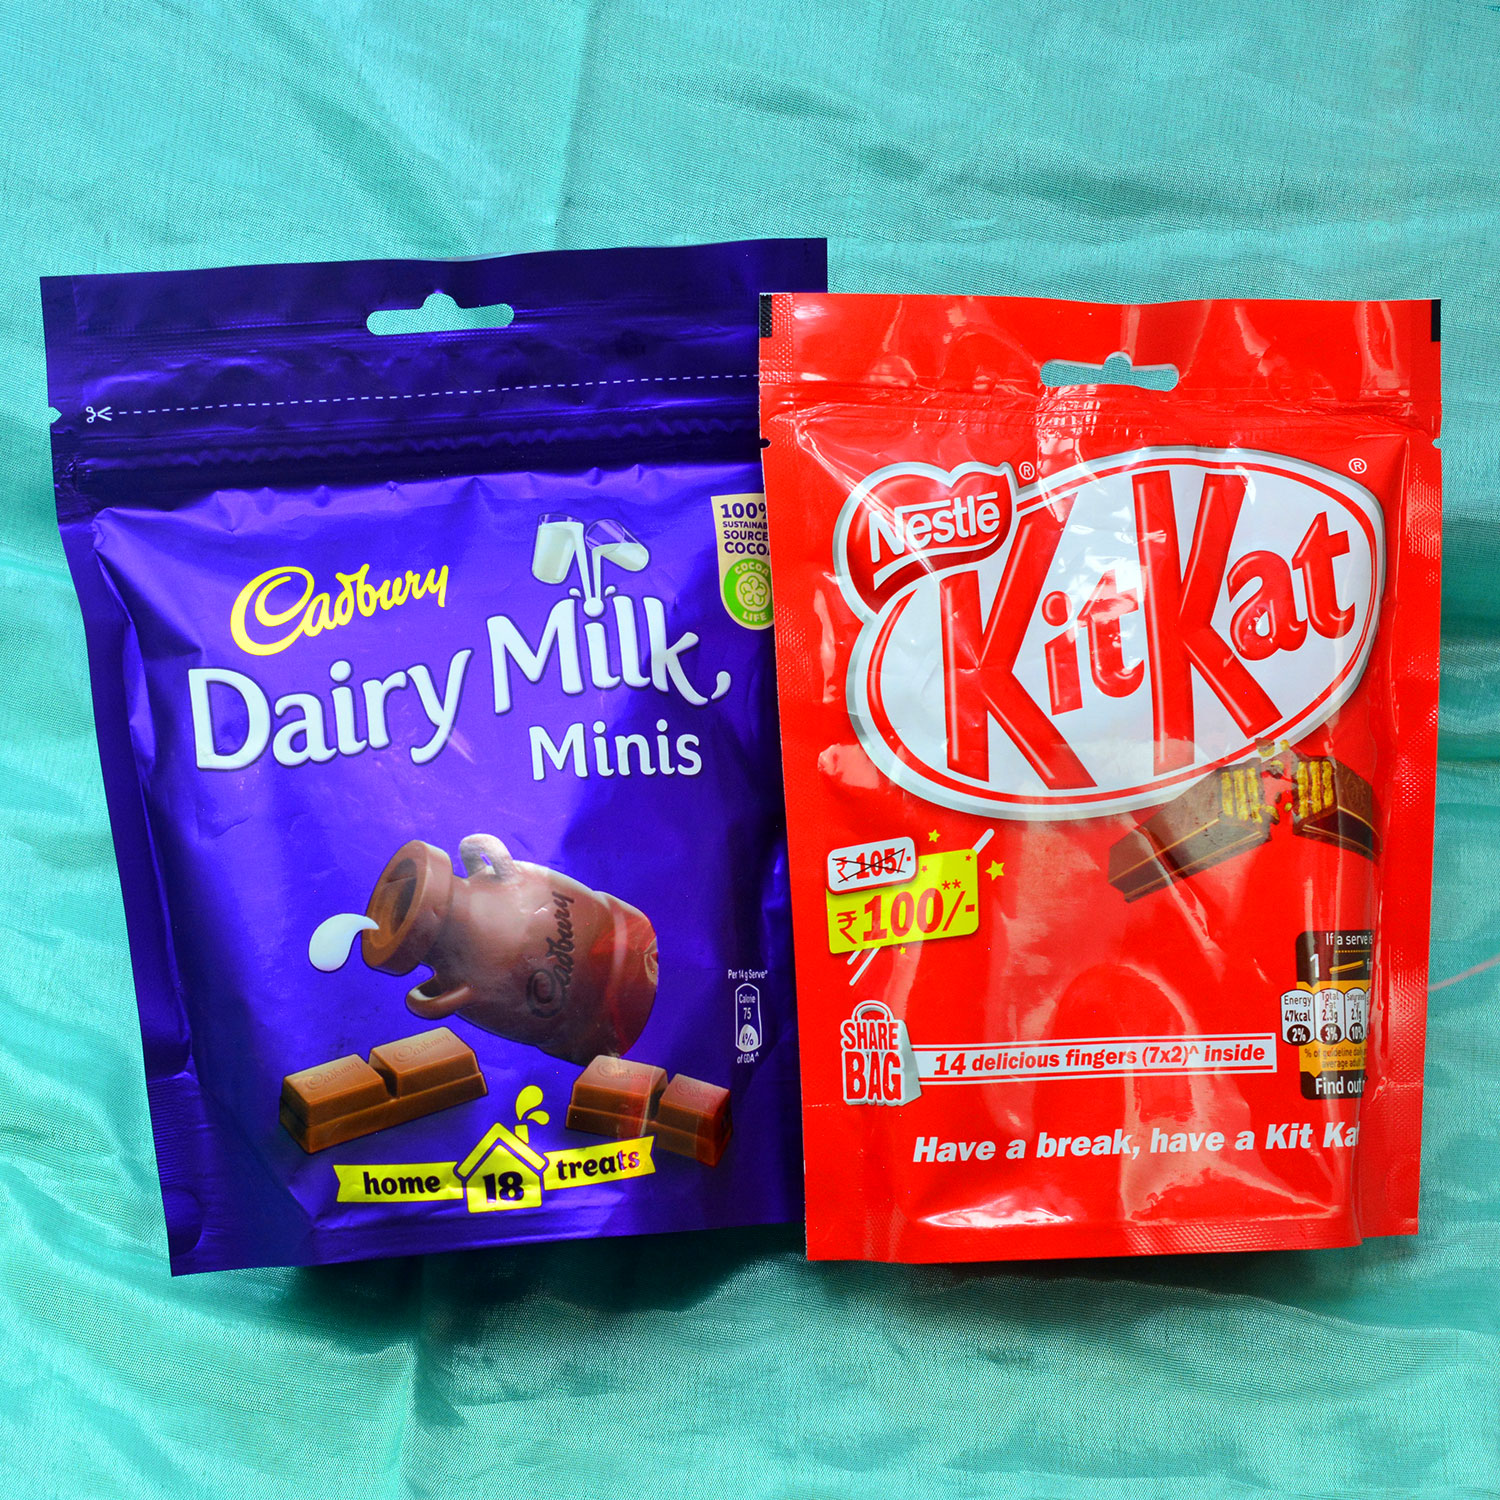 Tempting Dairy Milk Minis with Nestle Kit Kat Pack of Chocolates